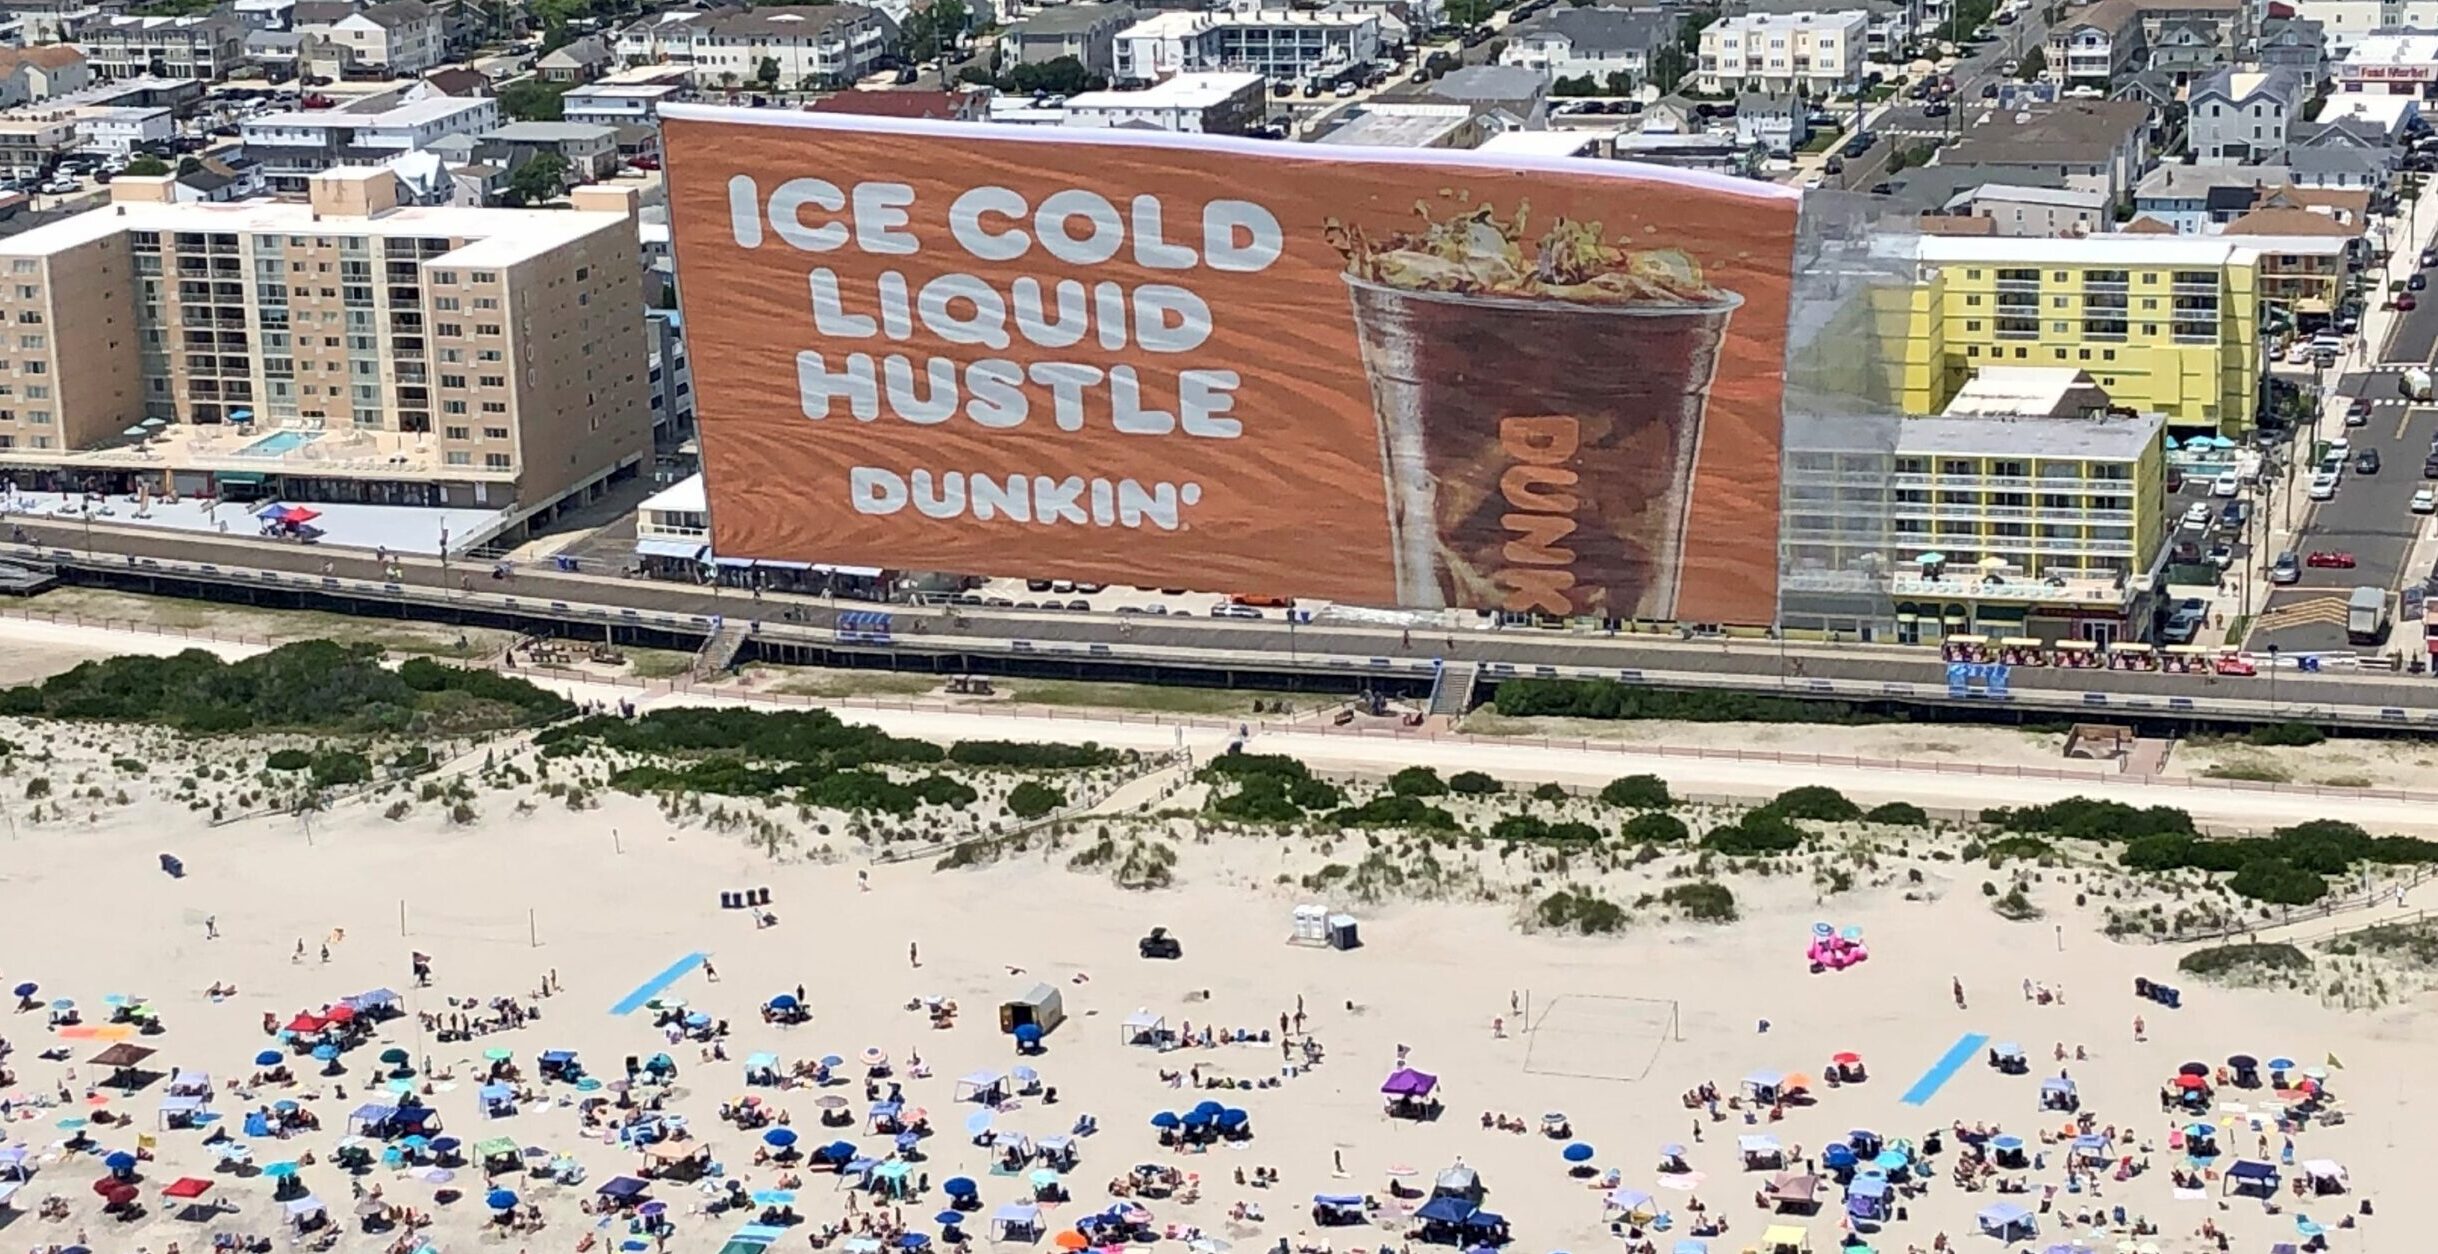 Dunkin Donuts Aerial Billboard over New Jersey Beach